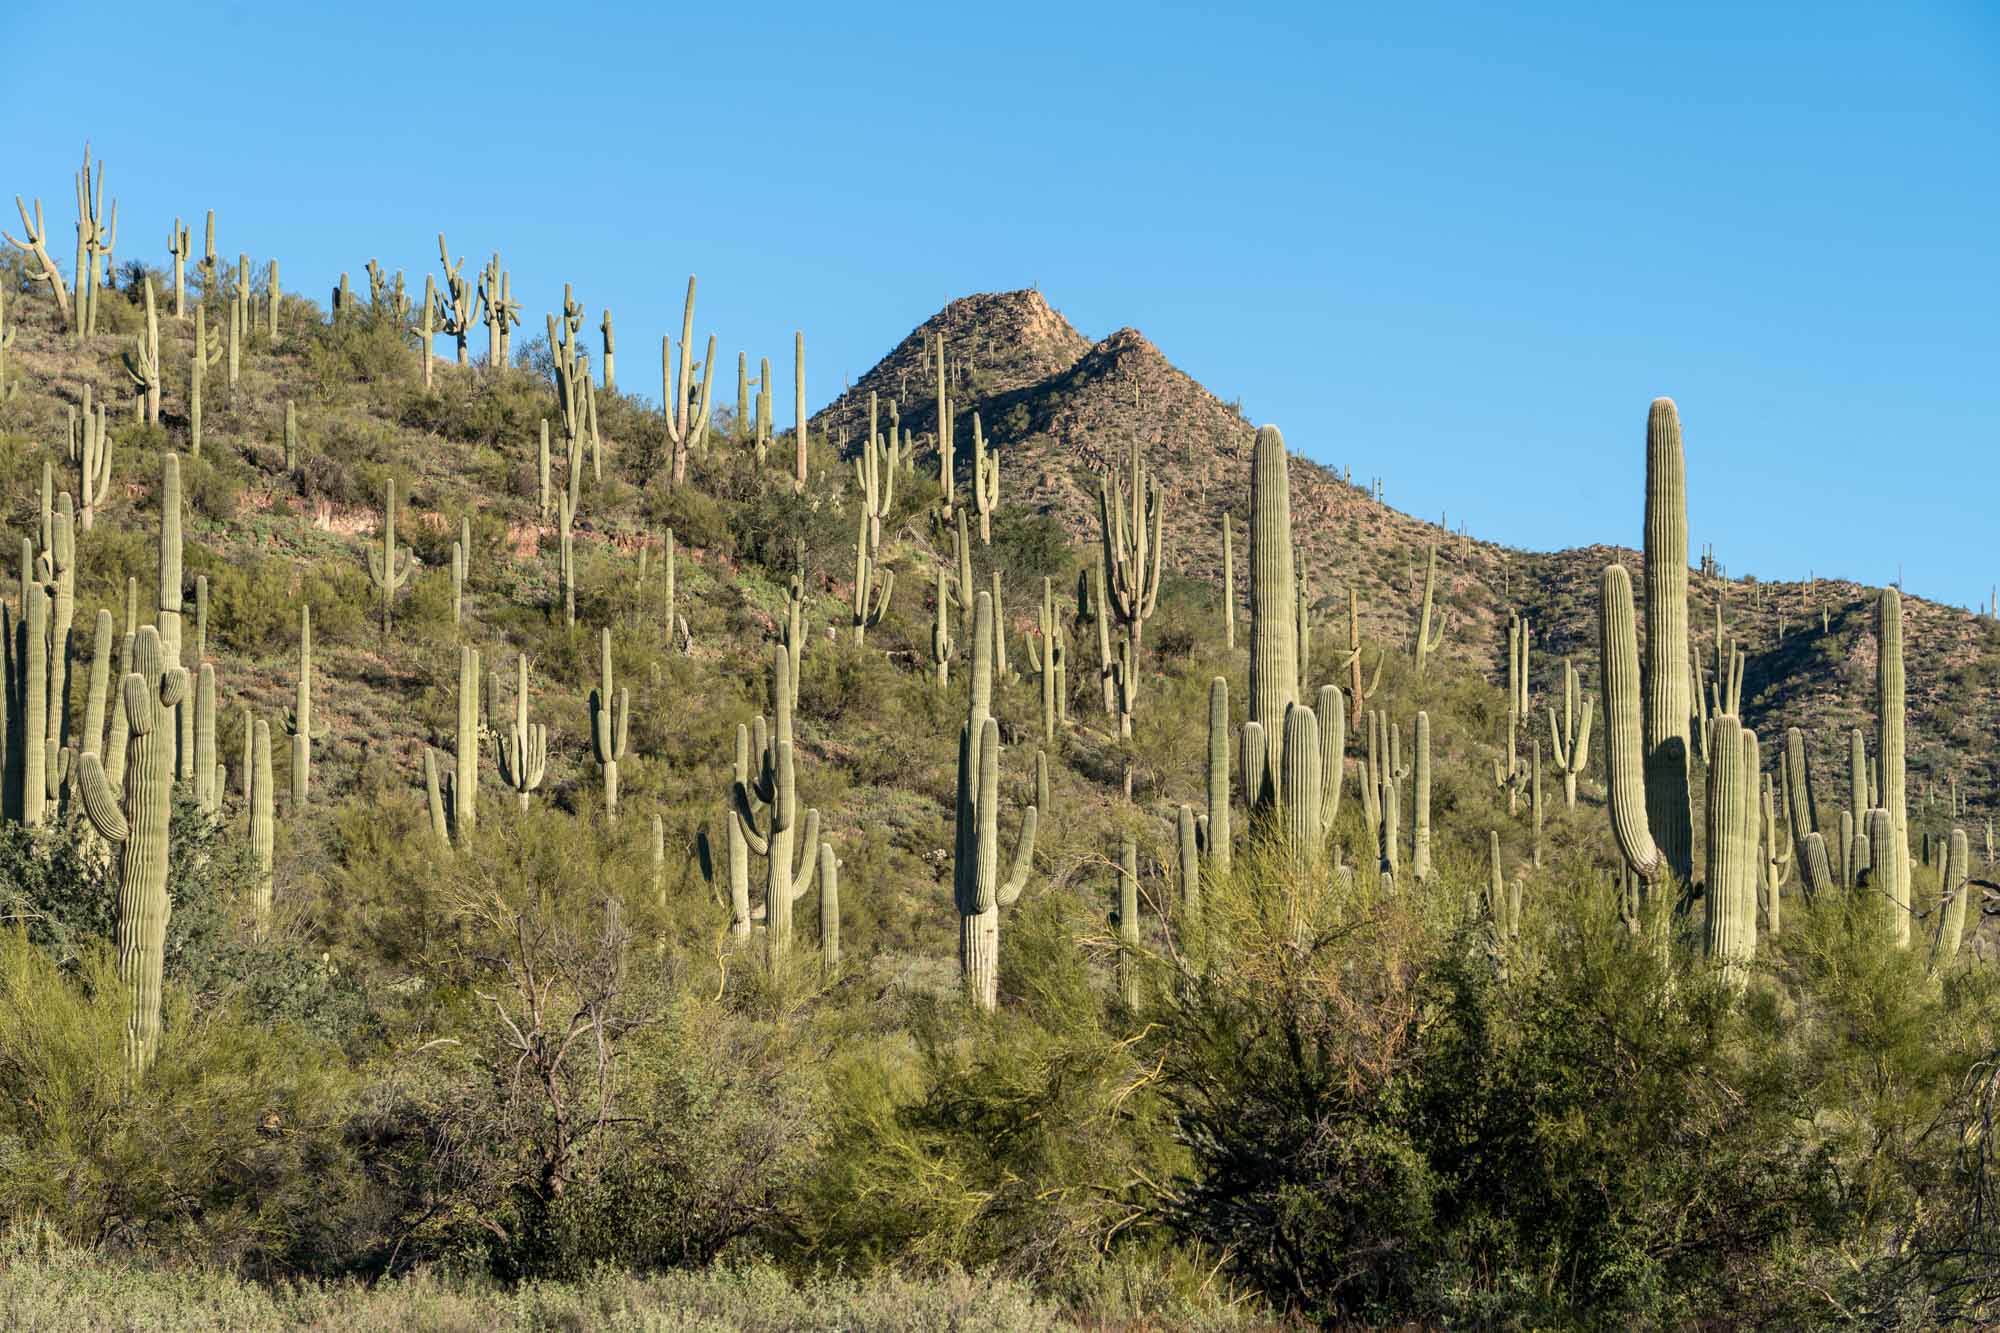 Saguaro cacti in the Sonoran Desert